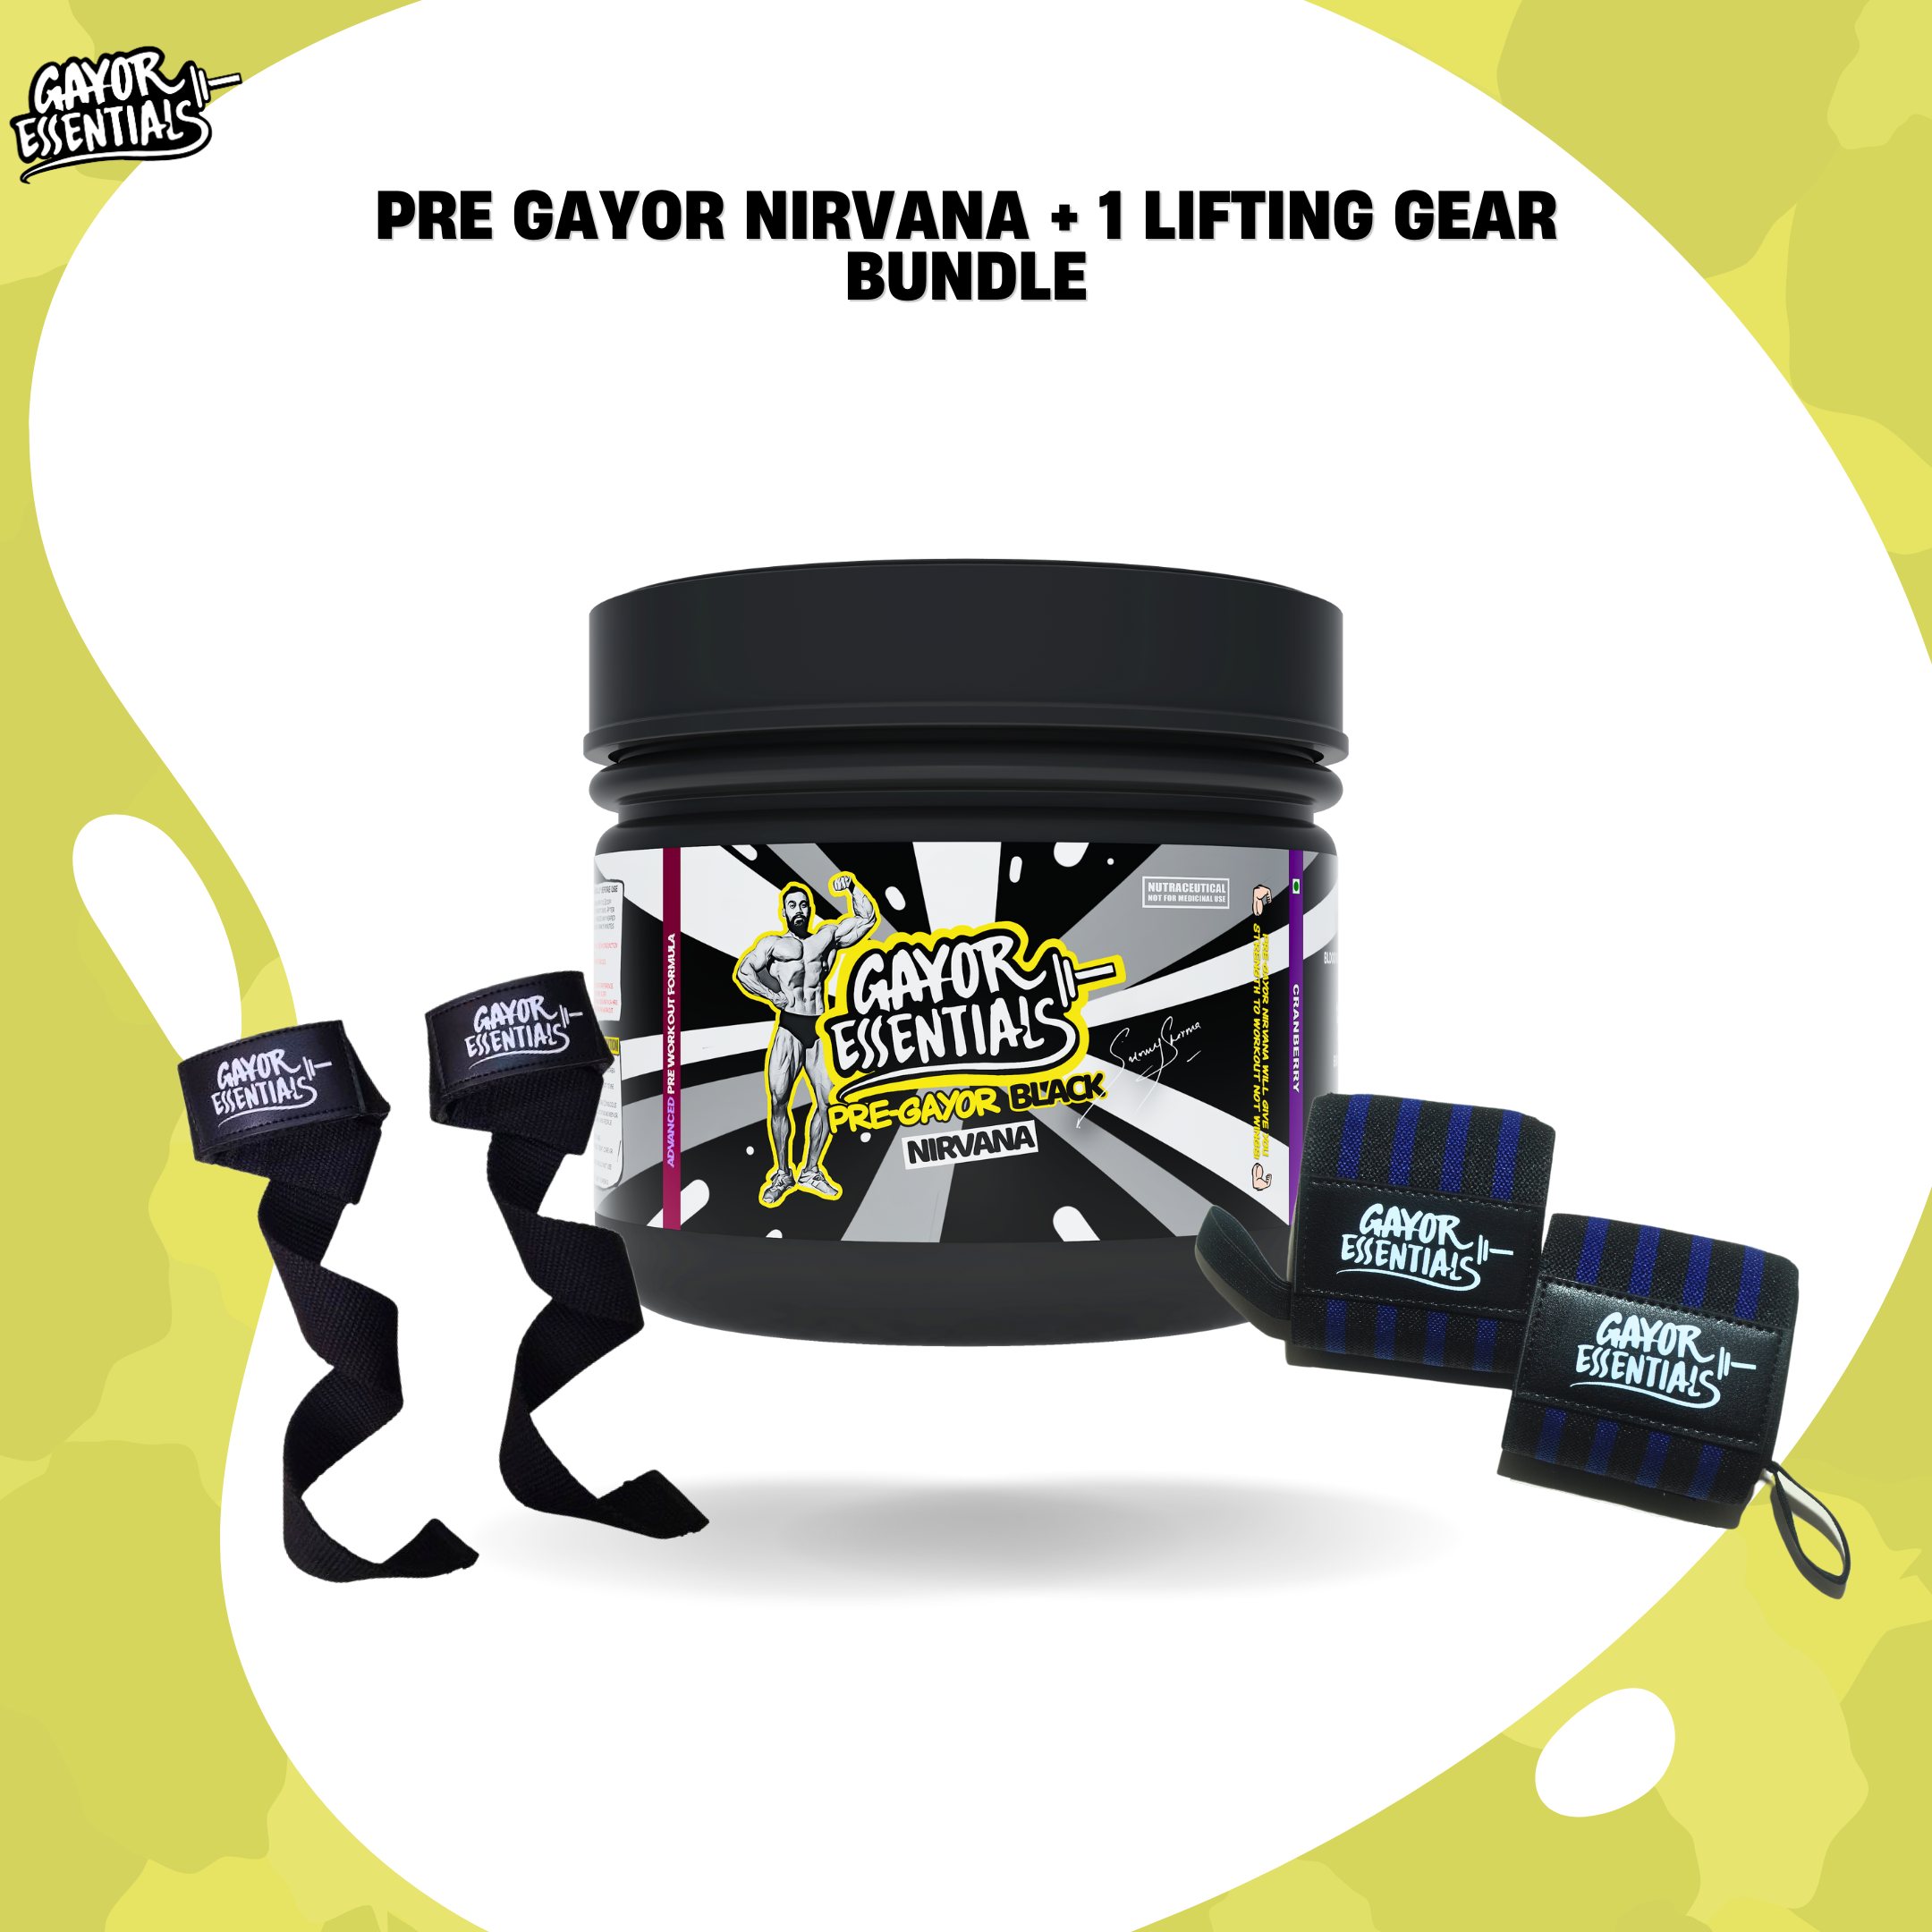 Pre Gayor Nirvana + Lifting Gear Bundle